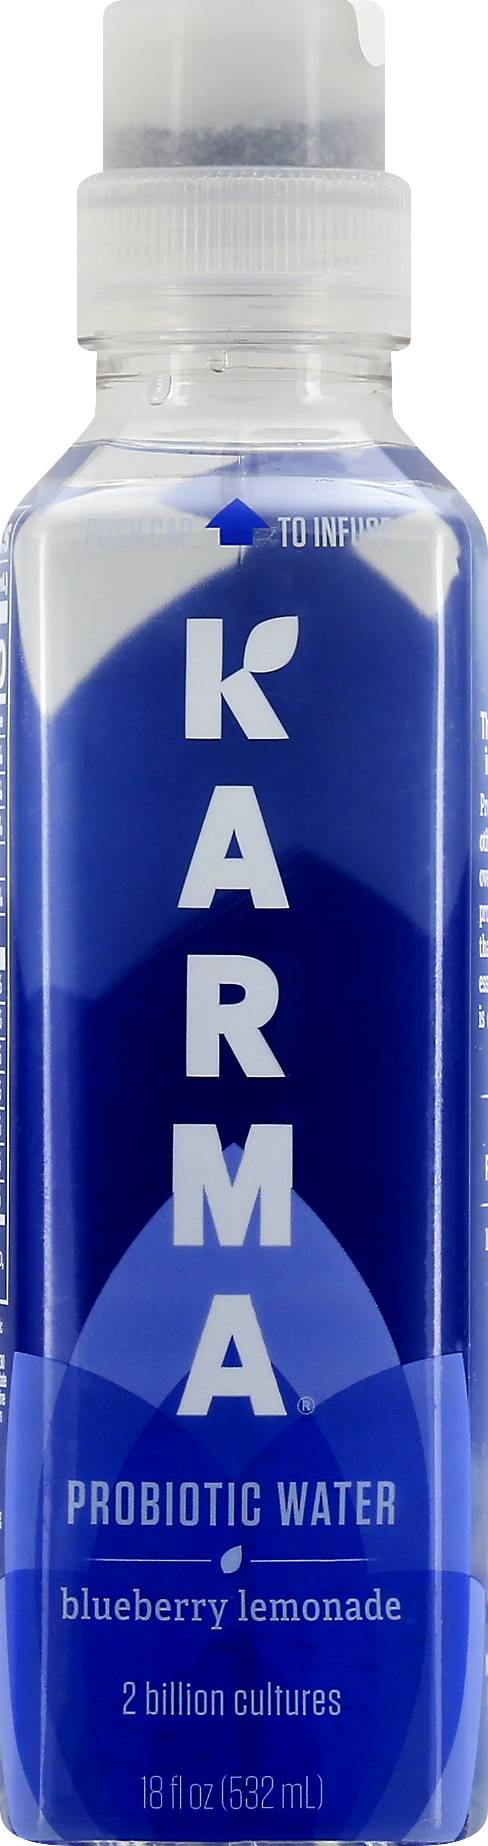 Karma Blueberry Lemonade Probiotic Water (18 fl oz)